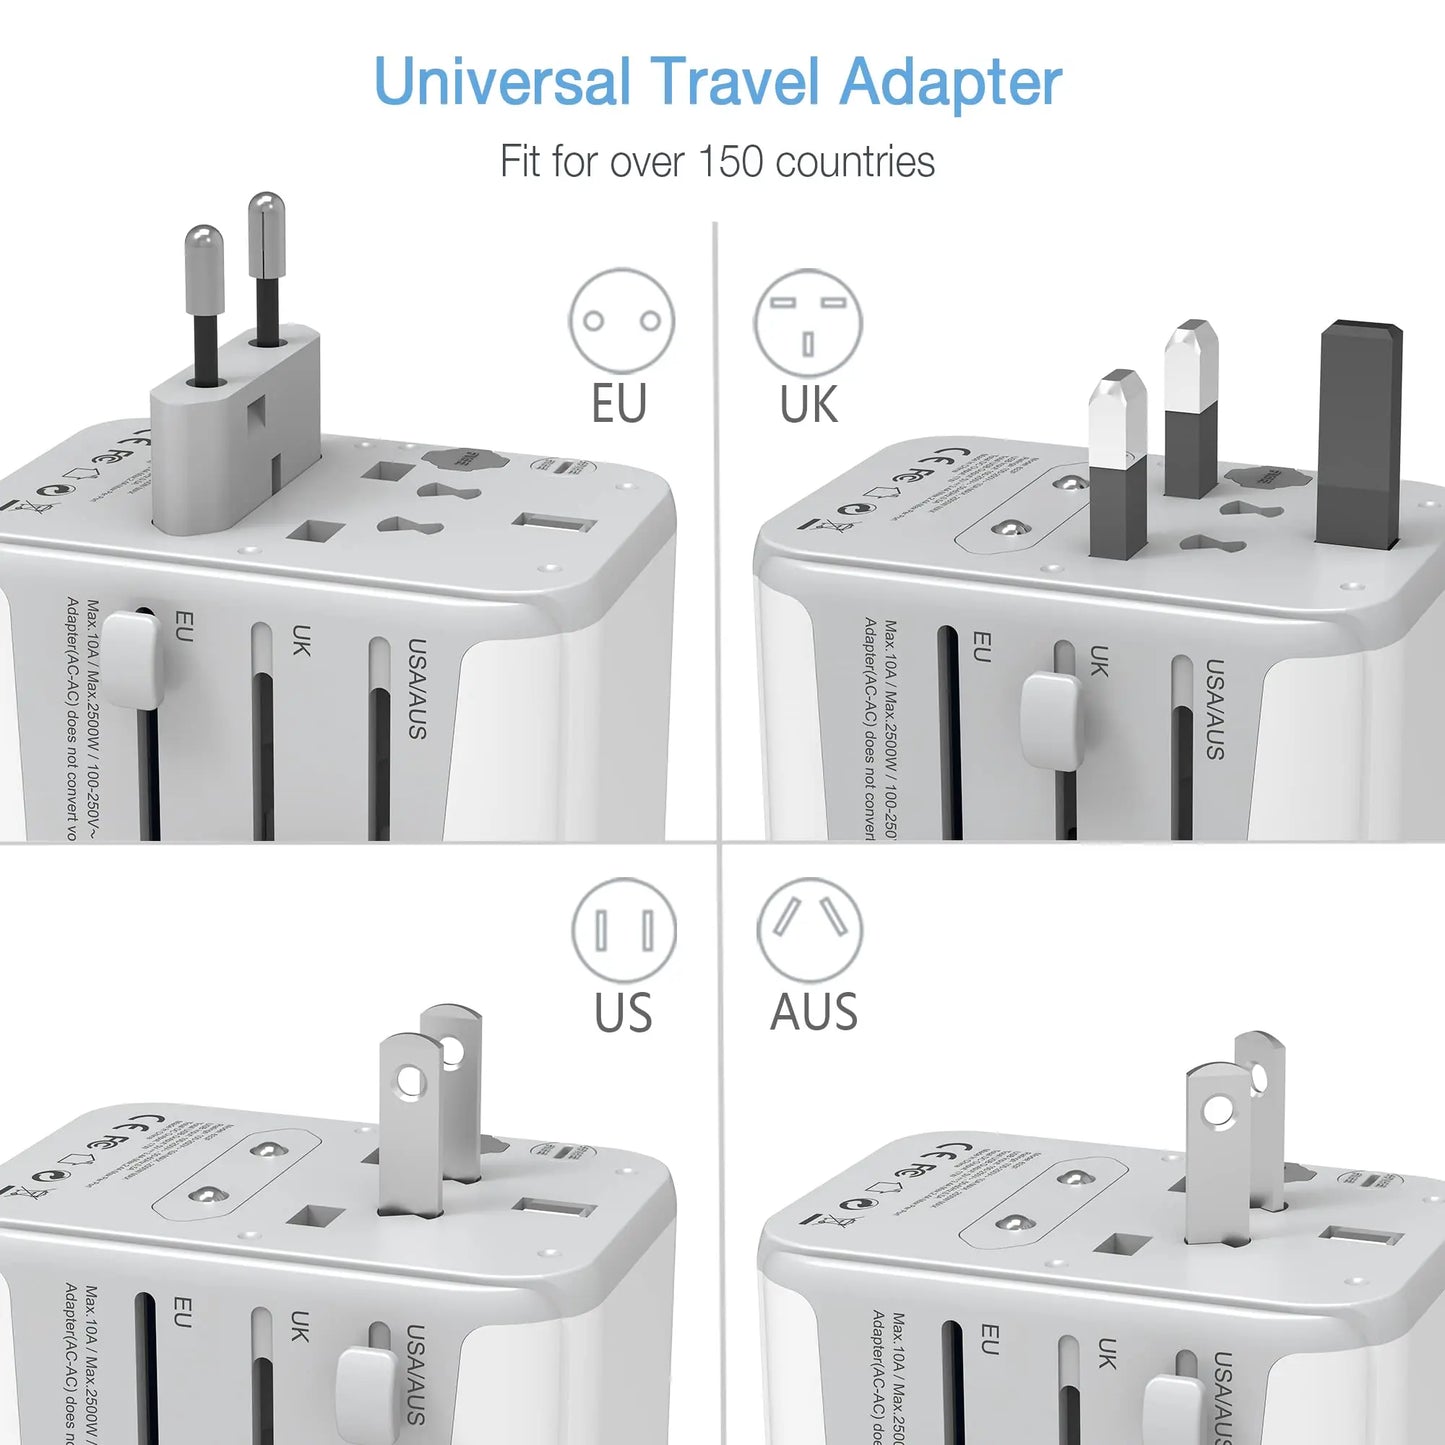 TESSAN Universal Travel Adapter, International Plug Adaptor Outlet Wall Charger Converter with 4 USB Ports to EU, AU, UK, USA